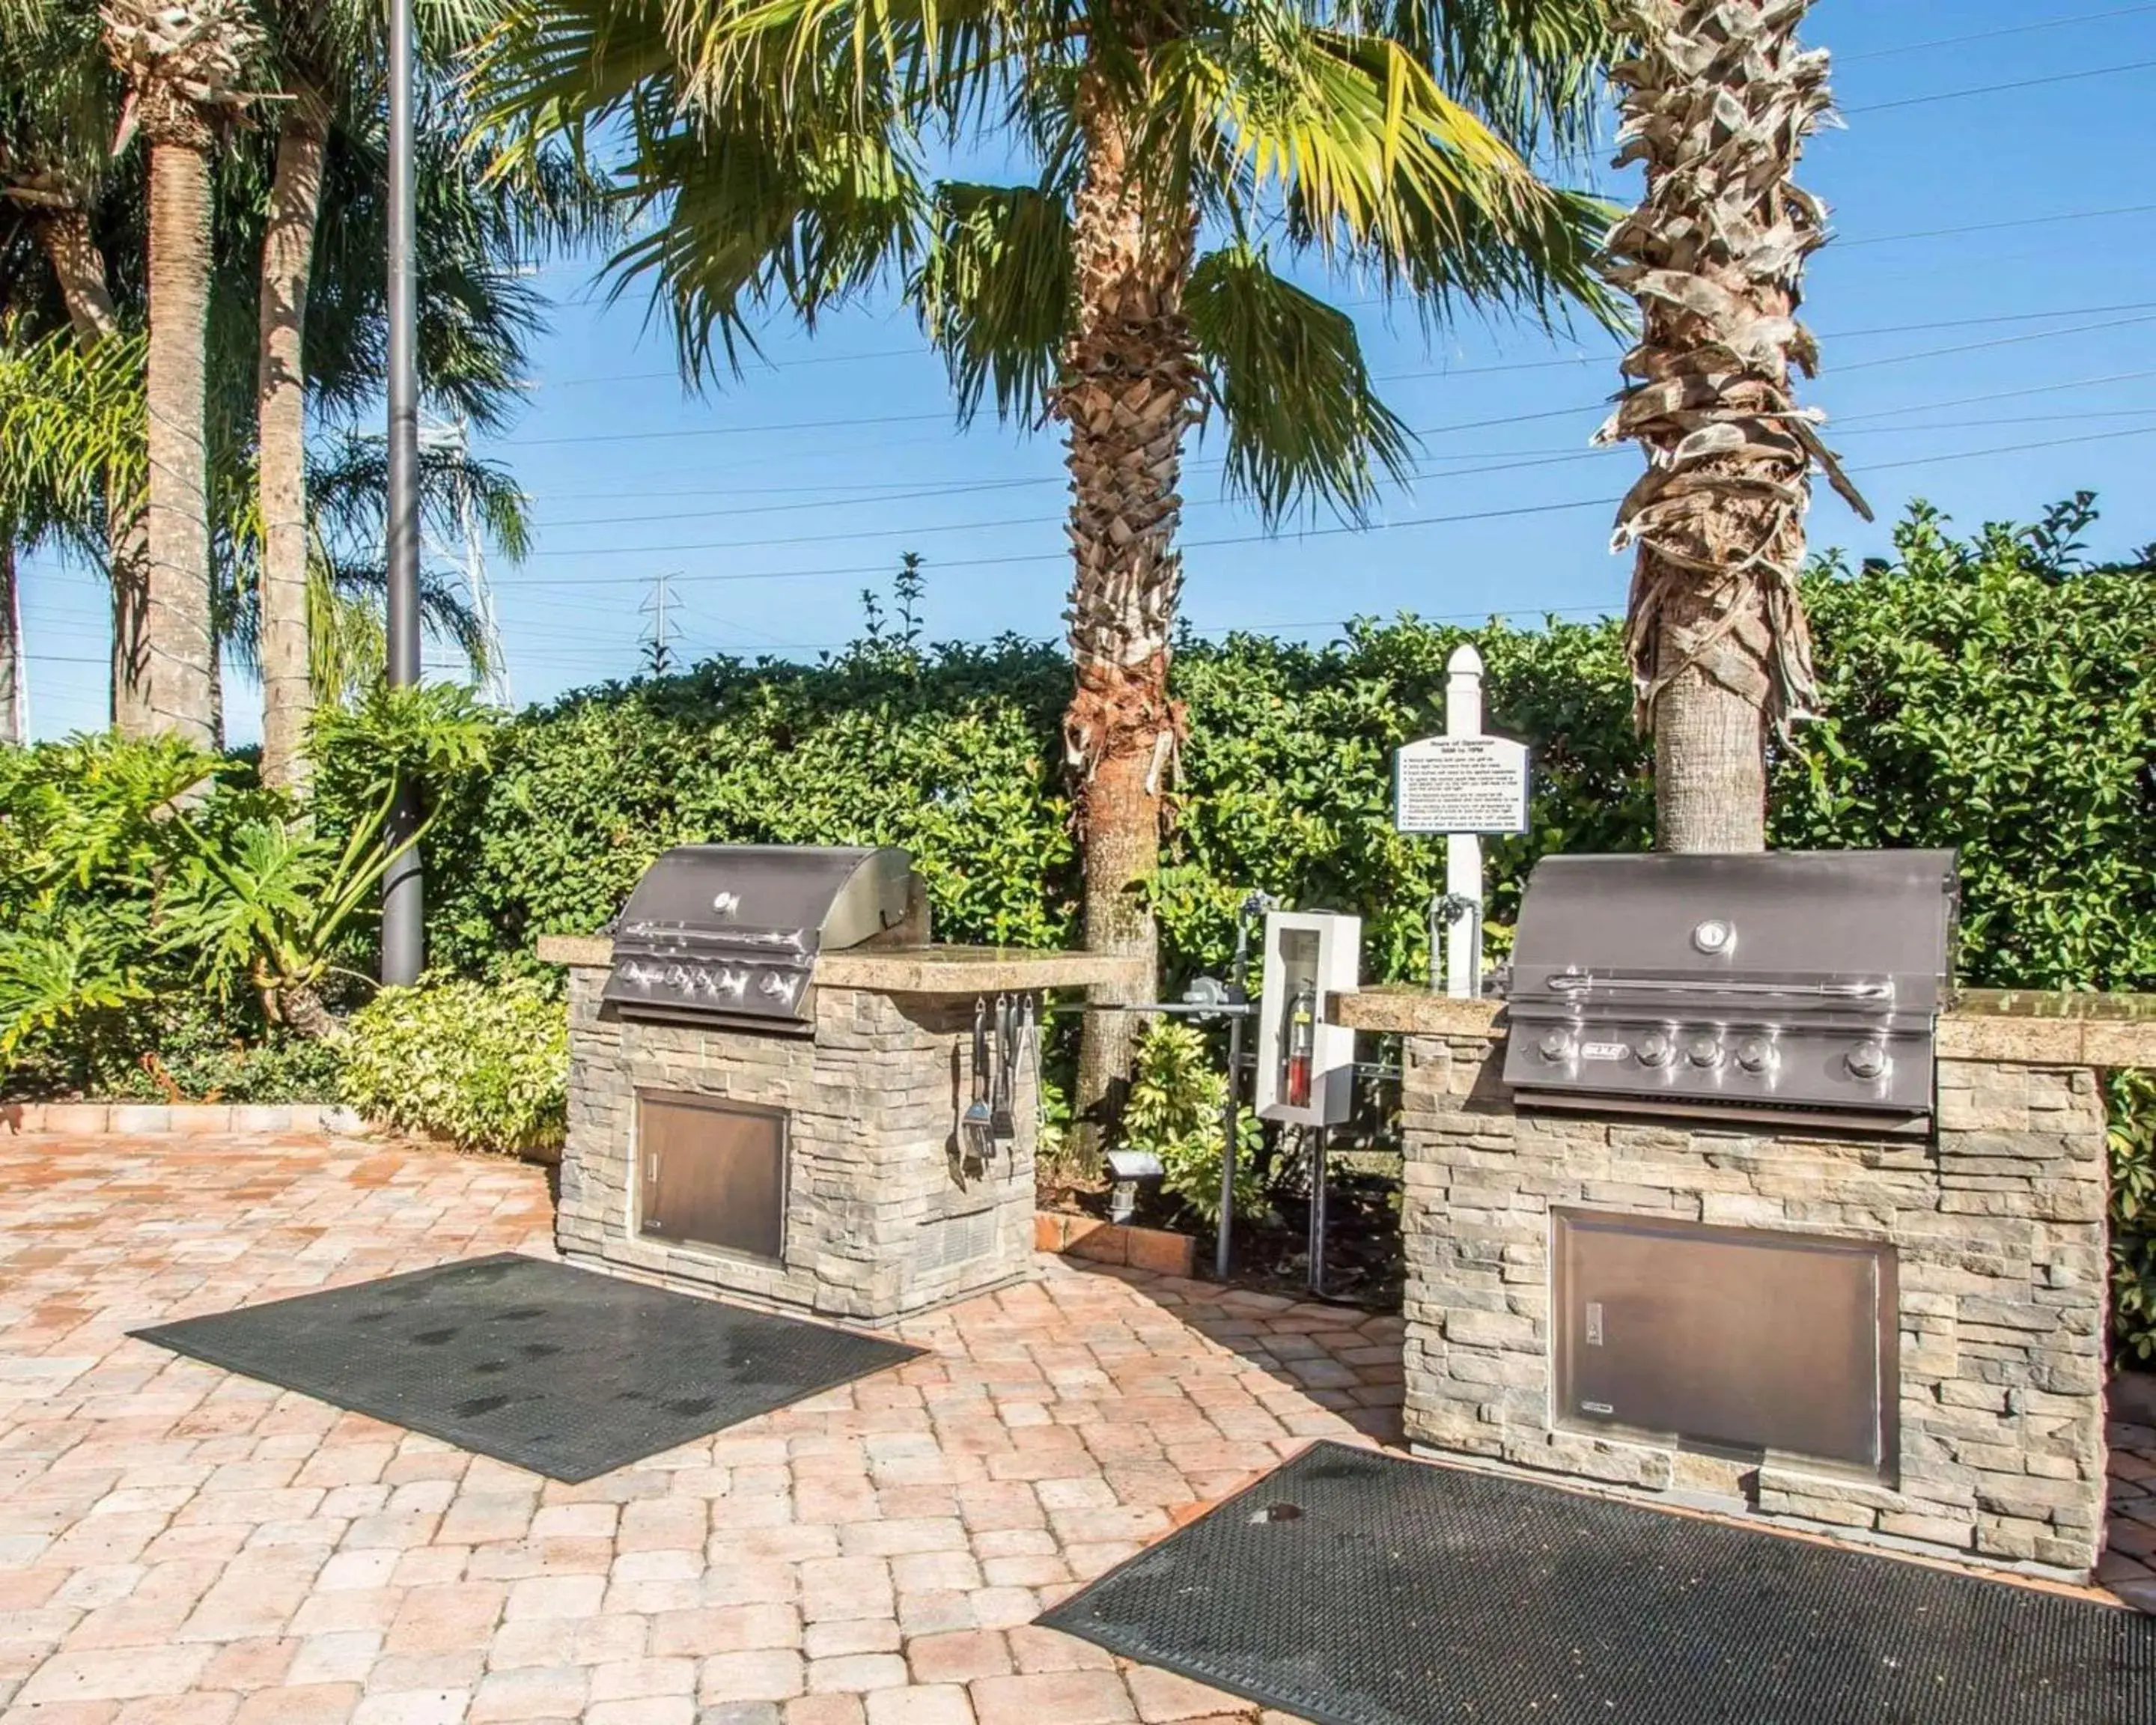 BBQ Facilities in Bluegreen Vacations Orlando's Sunshine Resort